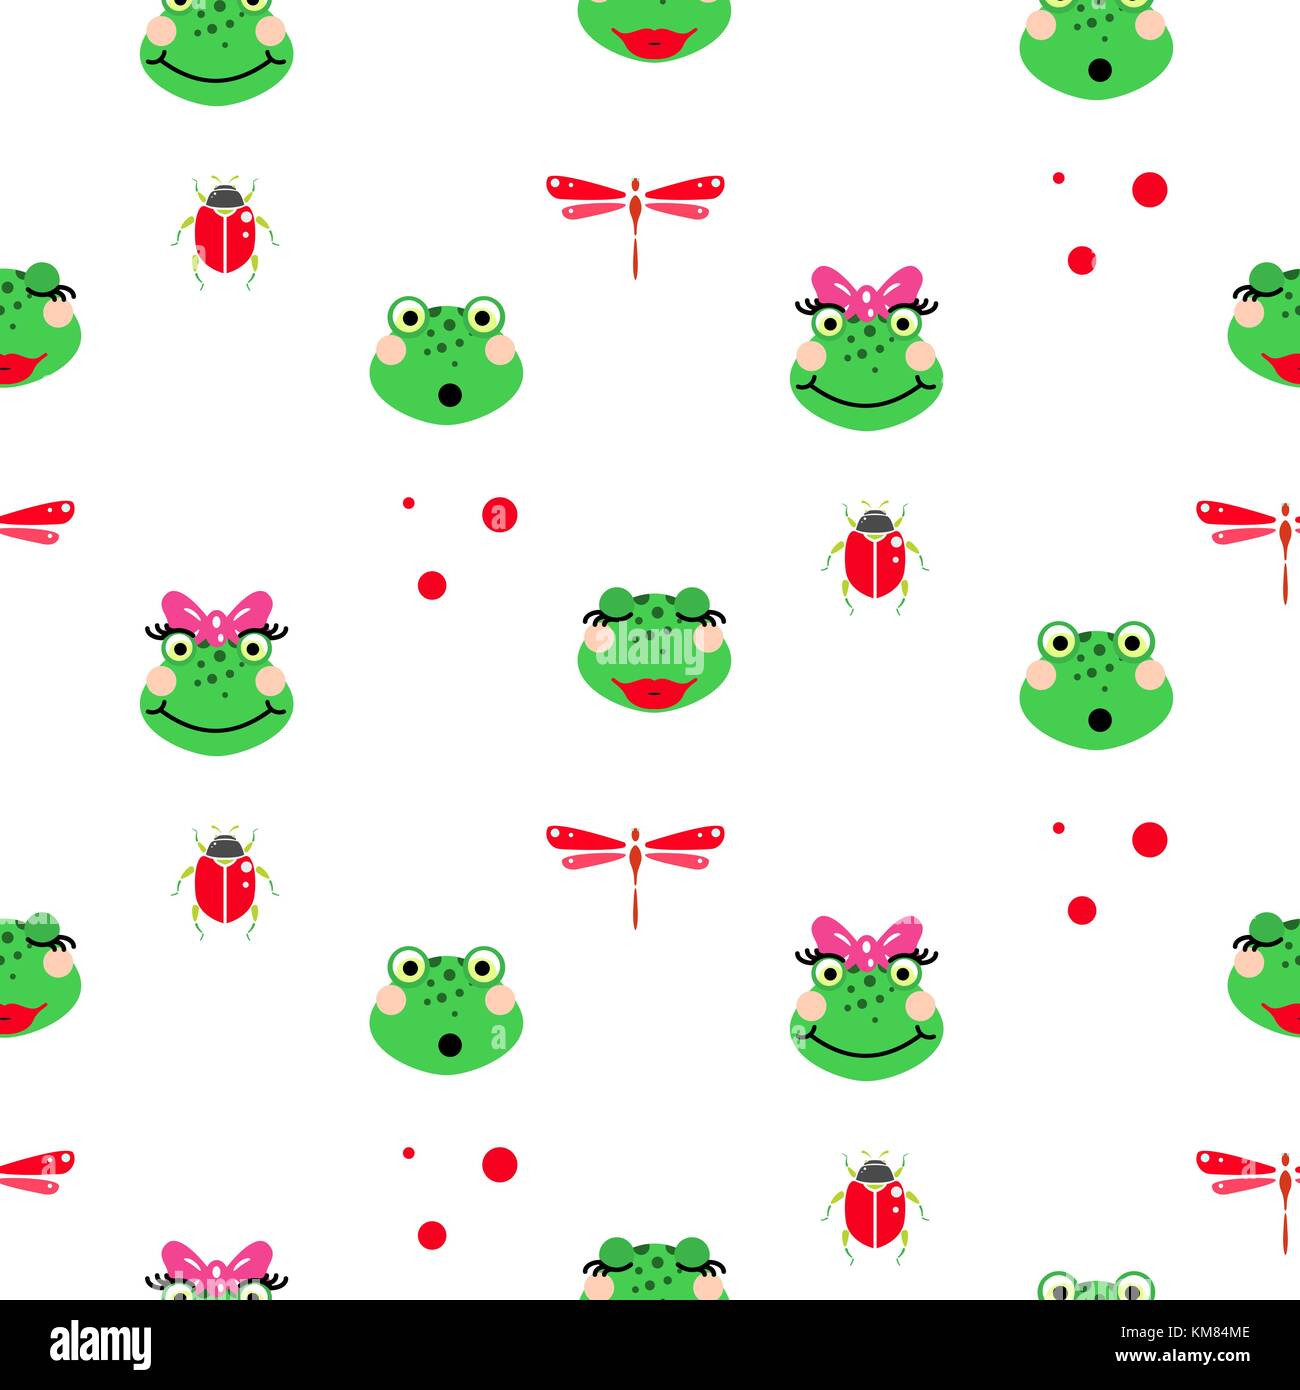 Frogs cartoon green seamless vector pattern. Stock Vector